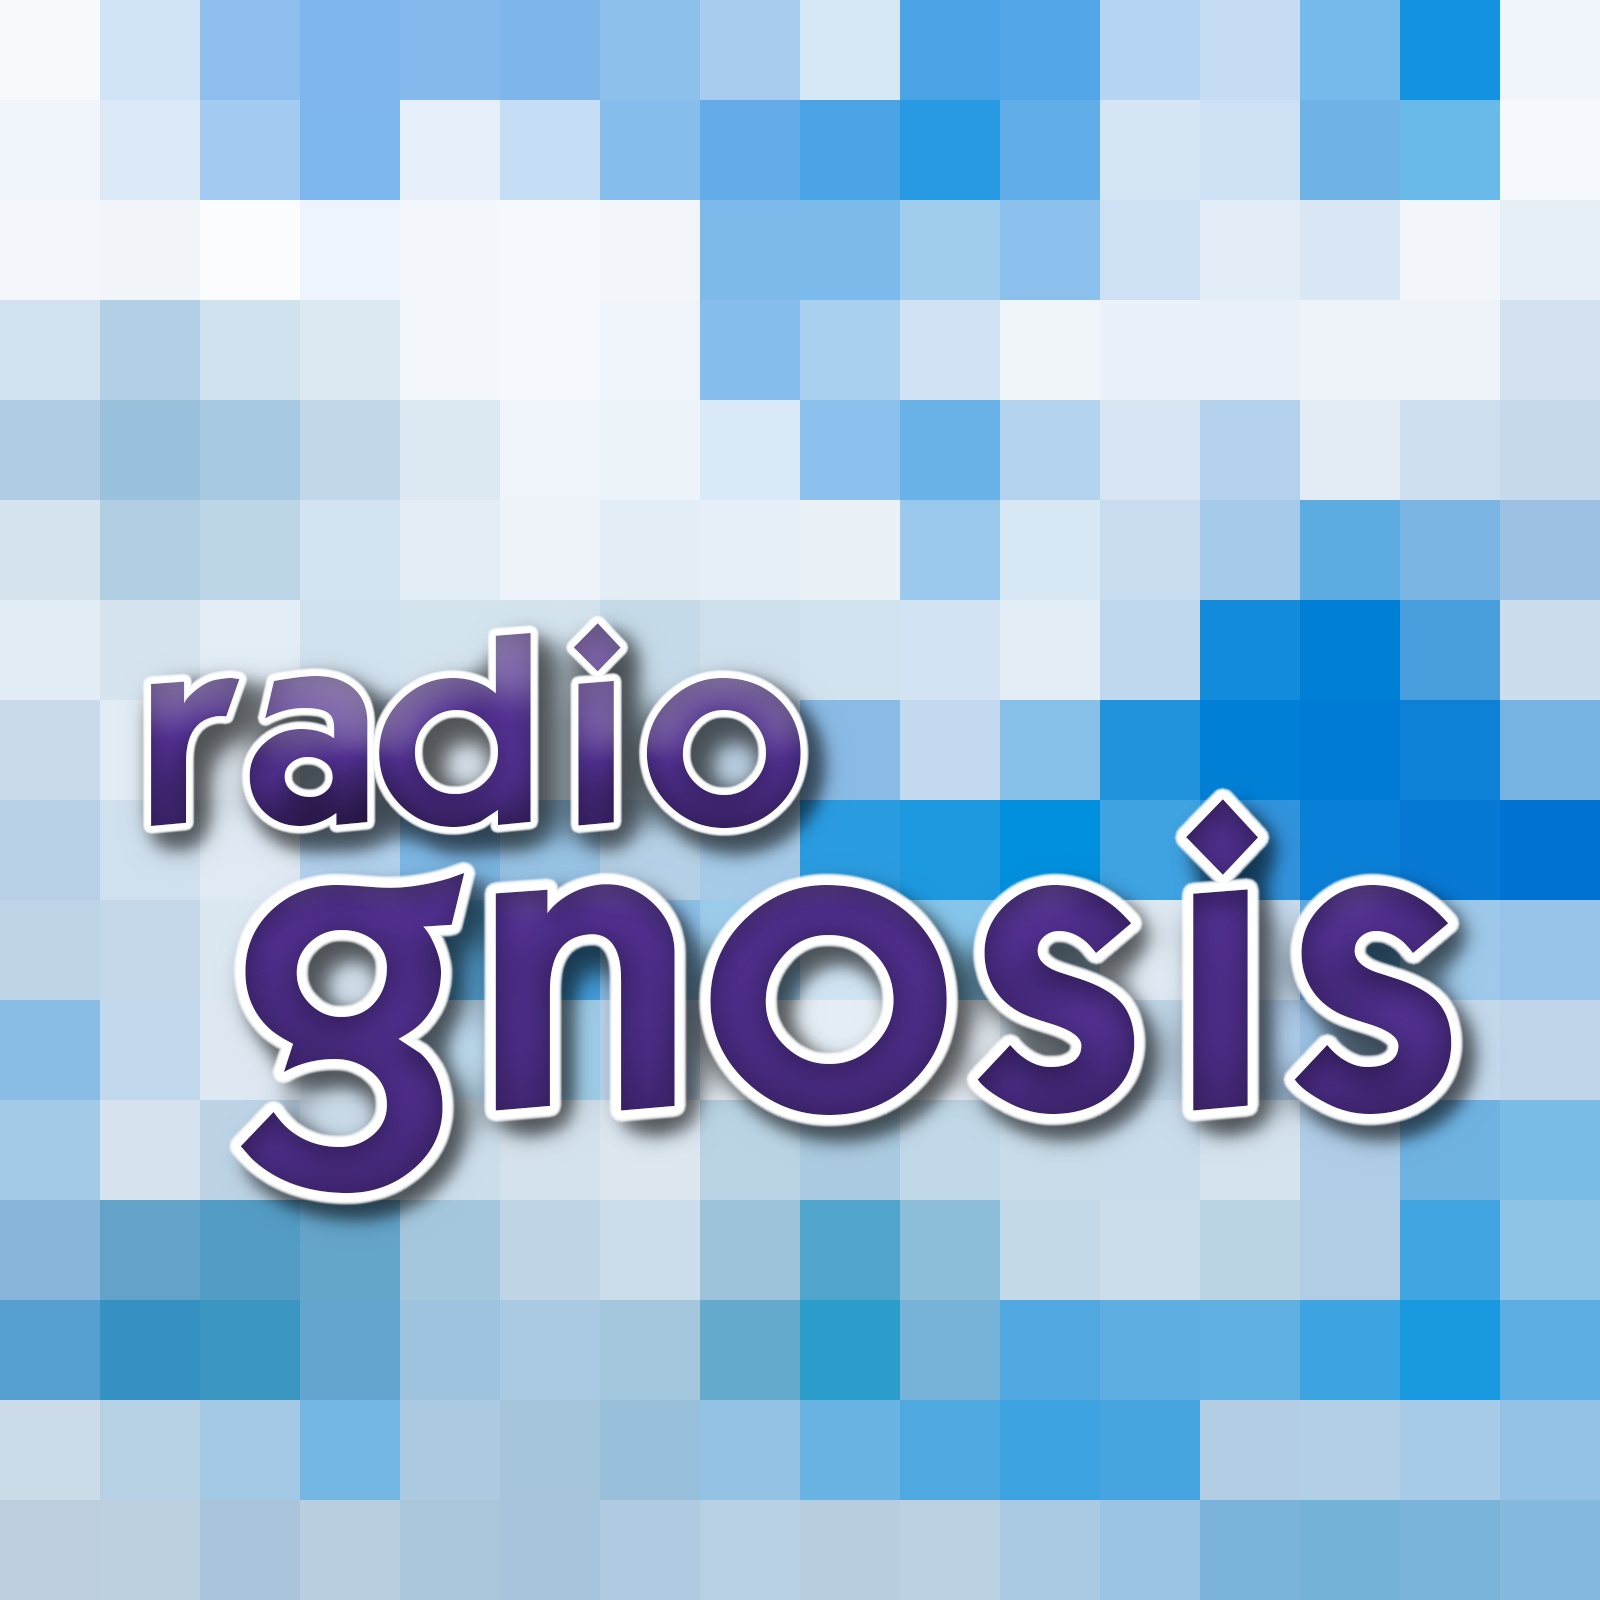 Radio Gnosis Test